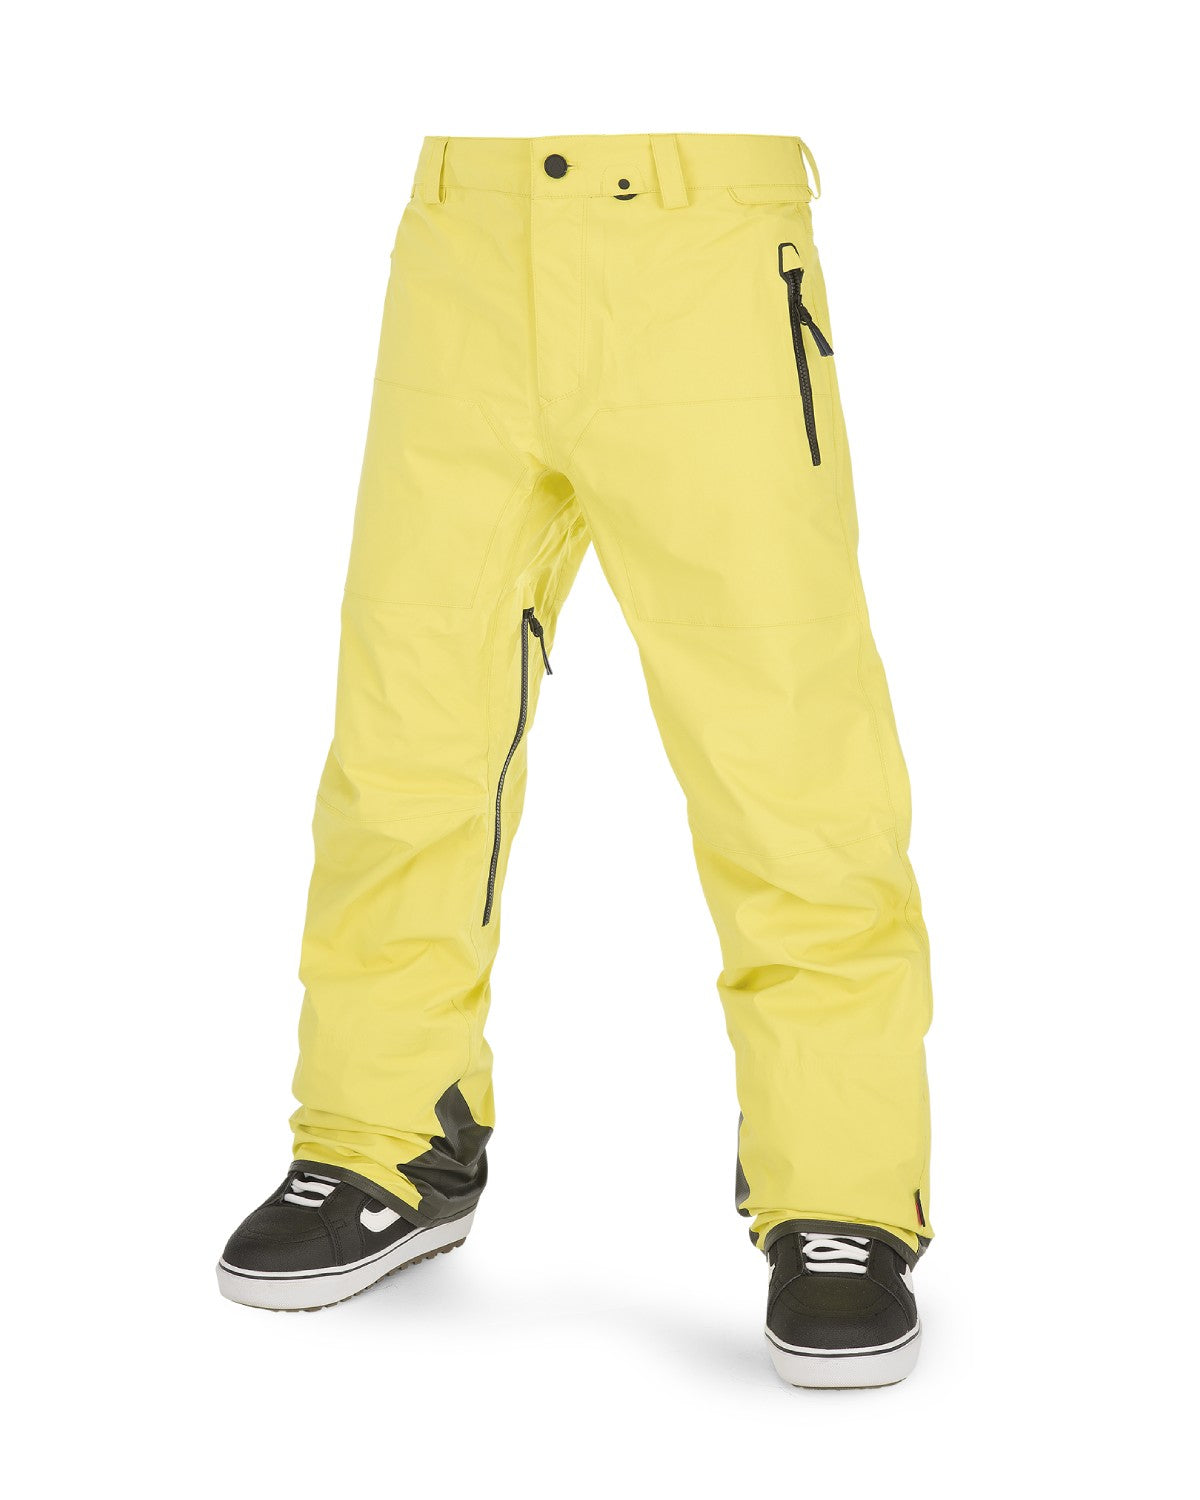 Volcom Guide GORE-TEX Ski Pant in Citron